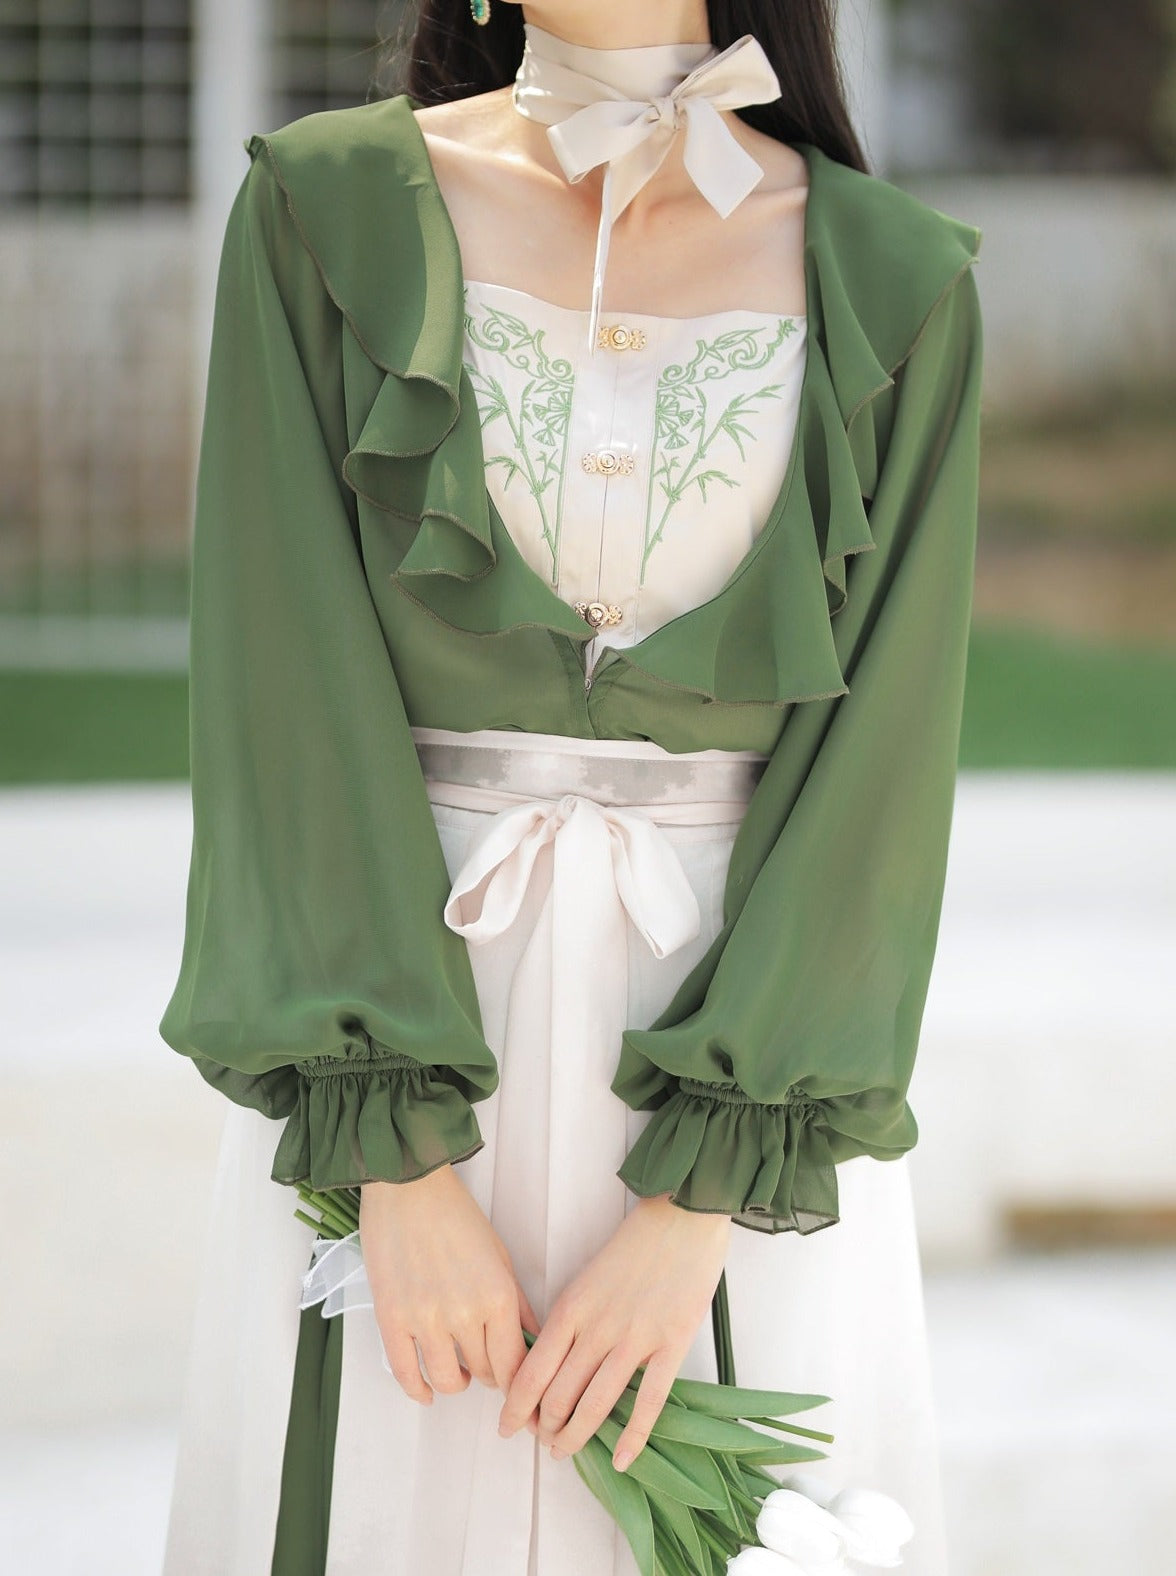 Lolita Elegant Chic China Top + Camisole + Long Skirt + Ribbon